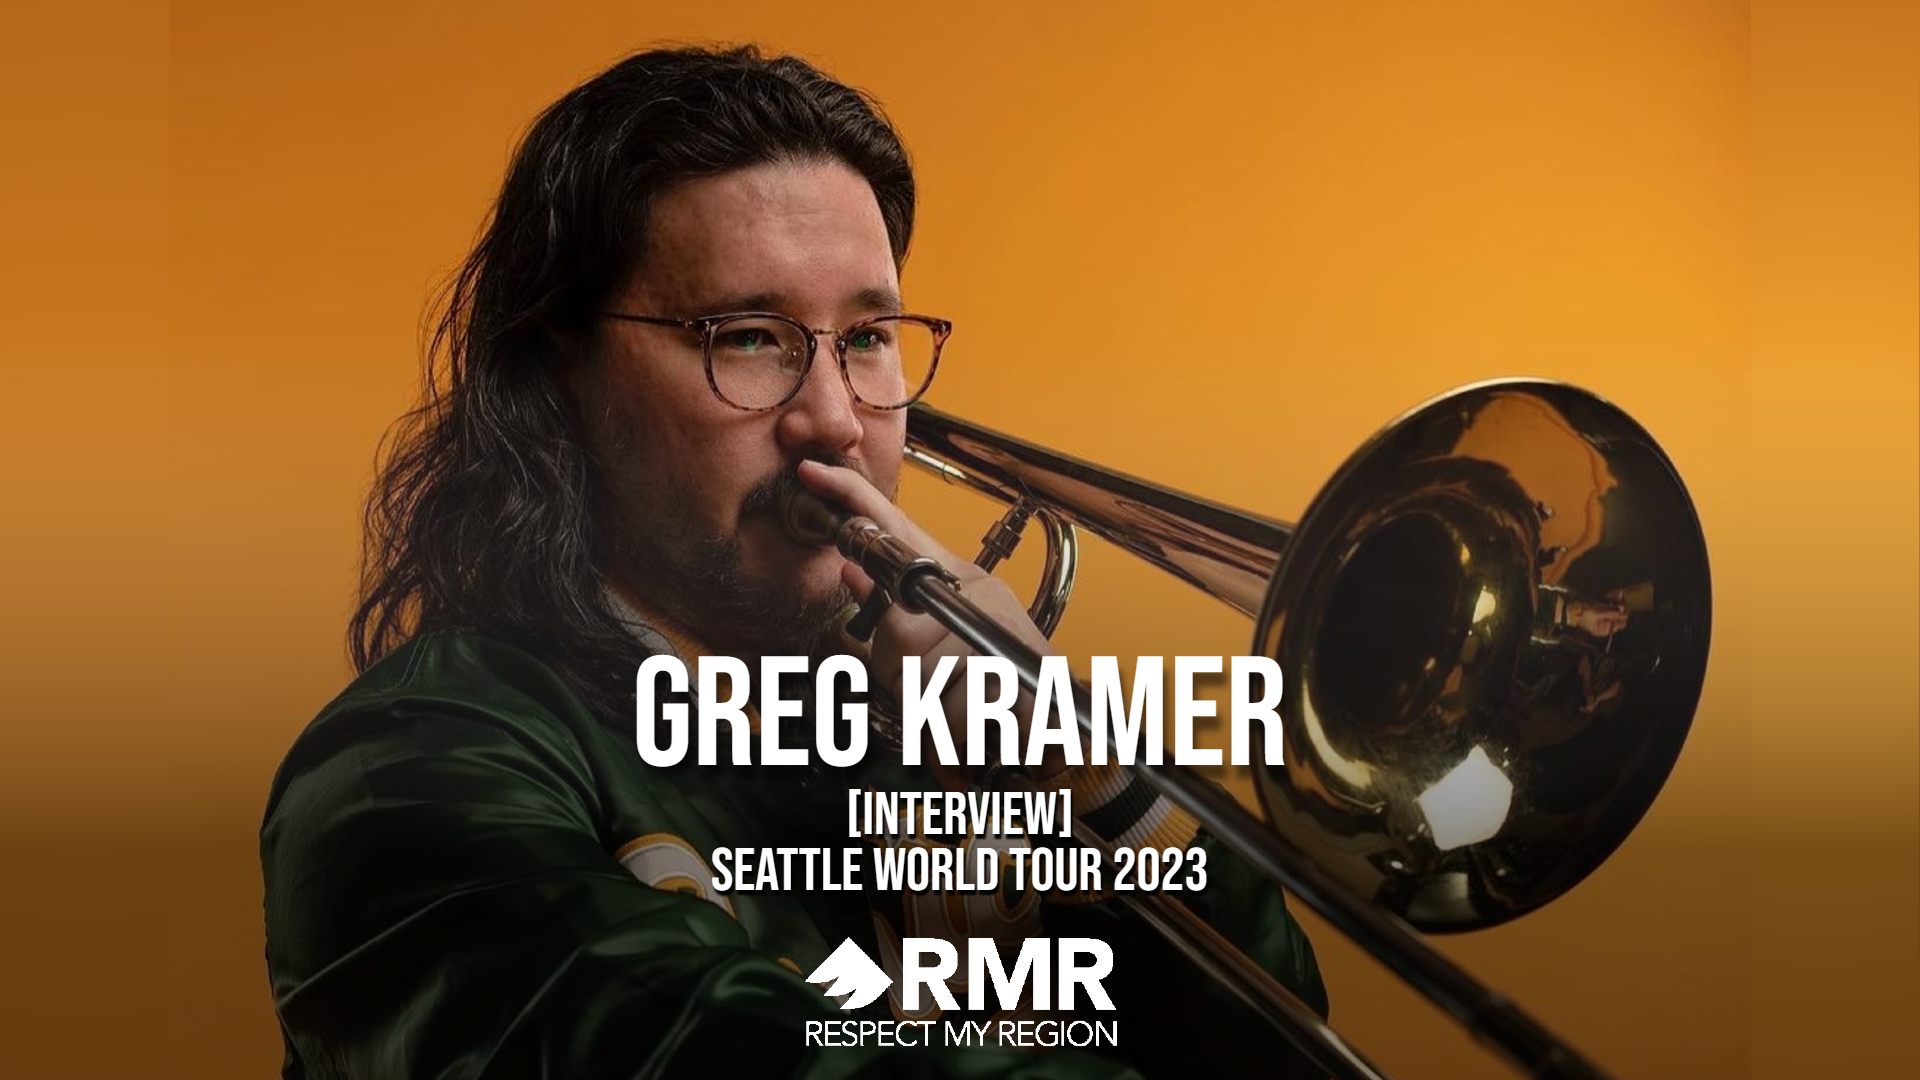 greg kramer interview seattle world tour 2023